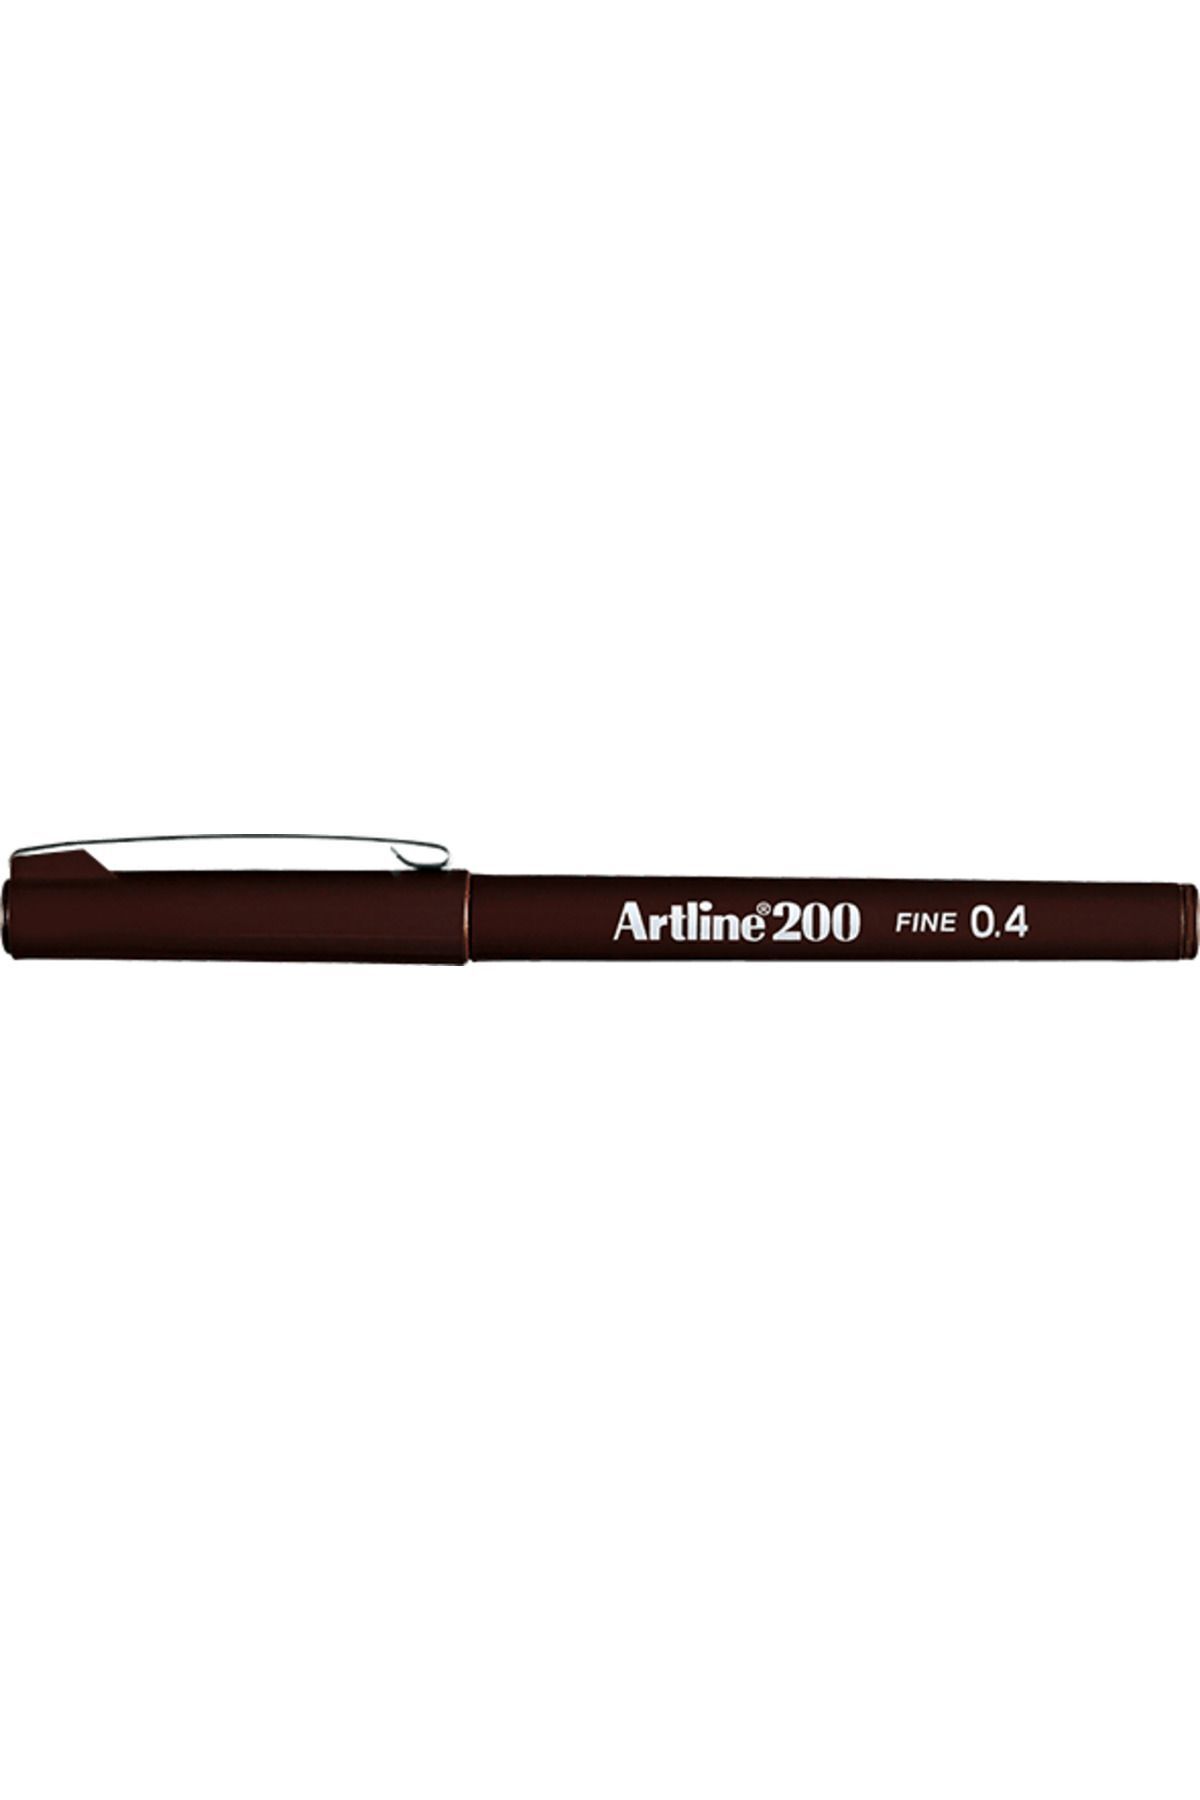 artline 200 Fineliner 0.4mm Keçe Uçlu Kalem Koyu Kahverengi